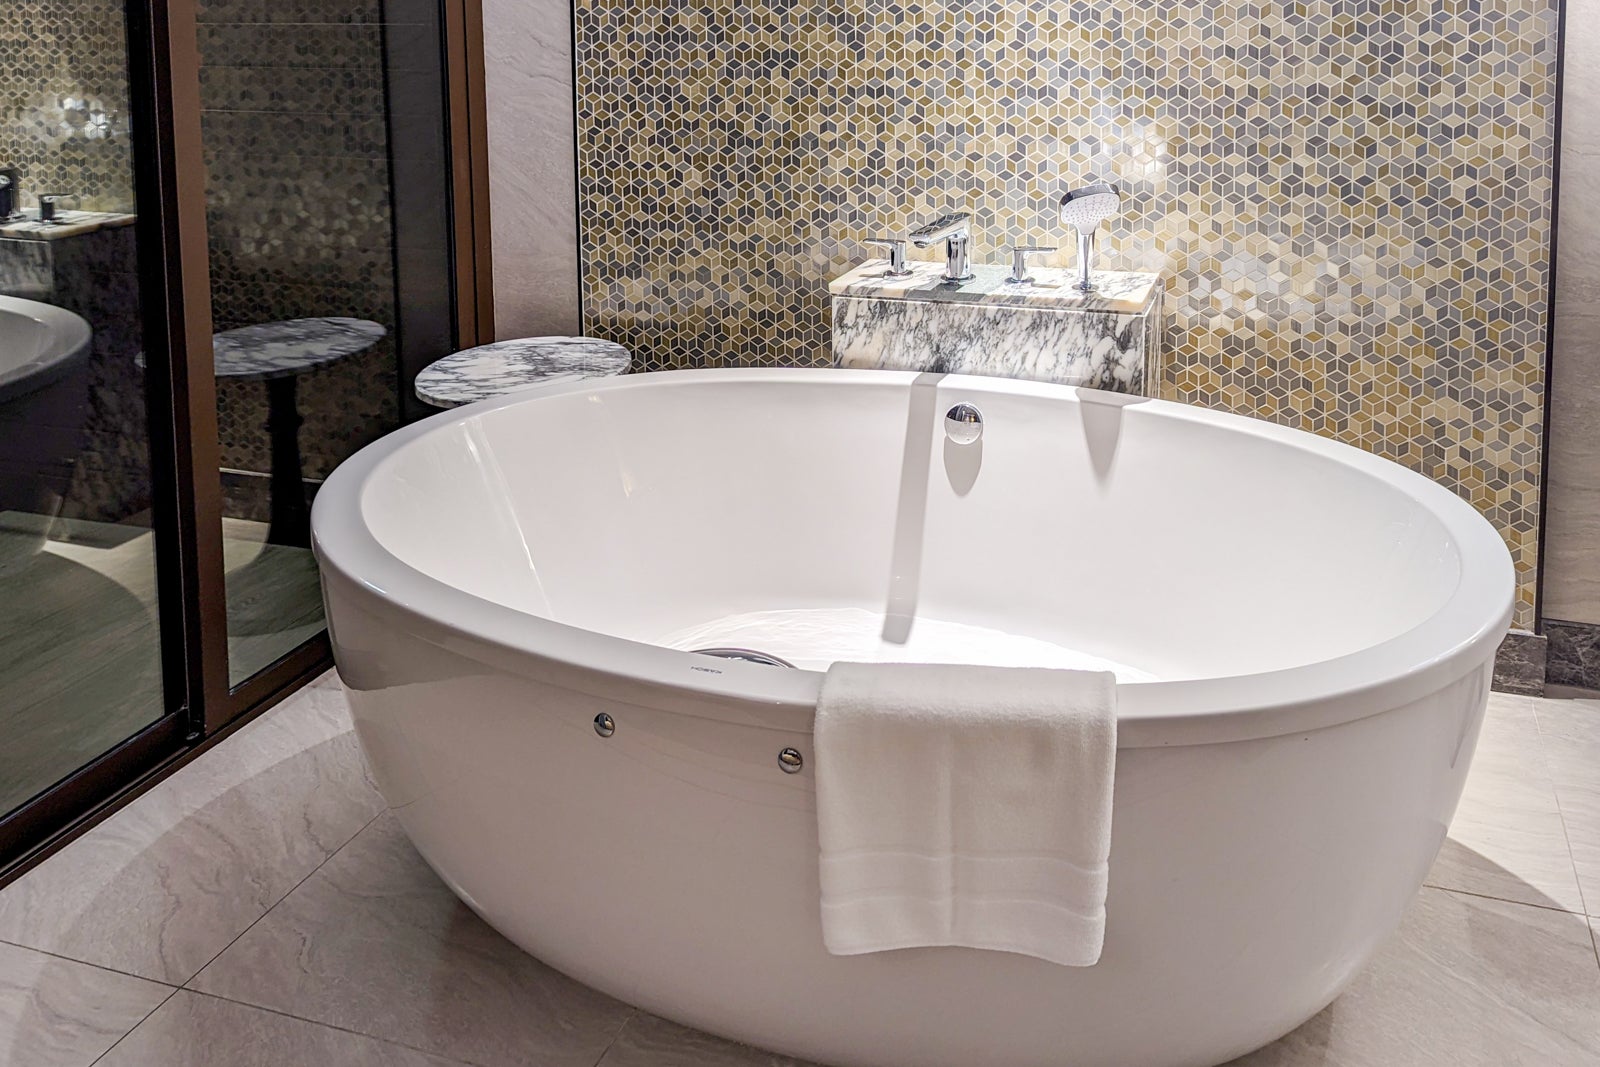 InterContinental Phuket Resort bath tub